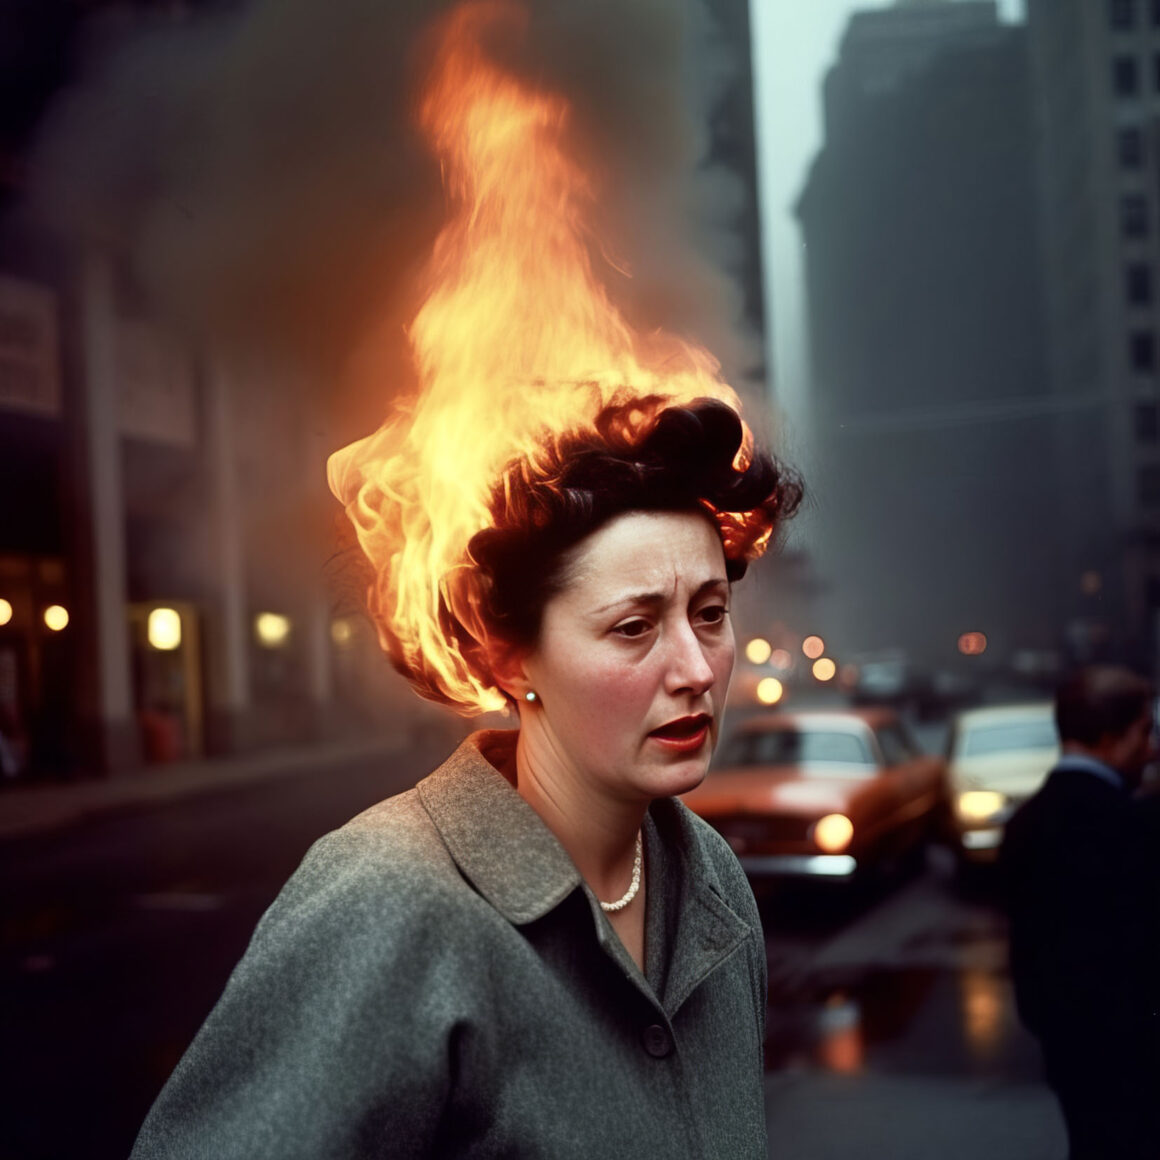 edward1910 woman head on fire in 1950s New York City hd street d62815bd 5675 4c7f 8031 e14b62f521f2 topaz enhance 3.4x faceai